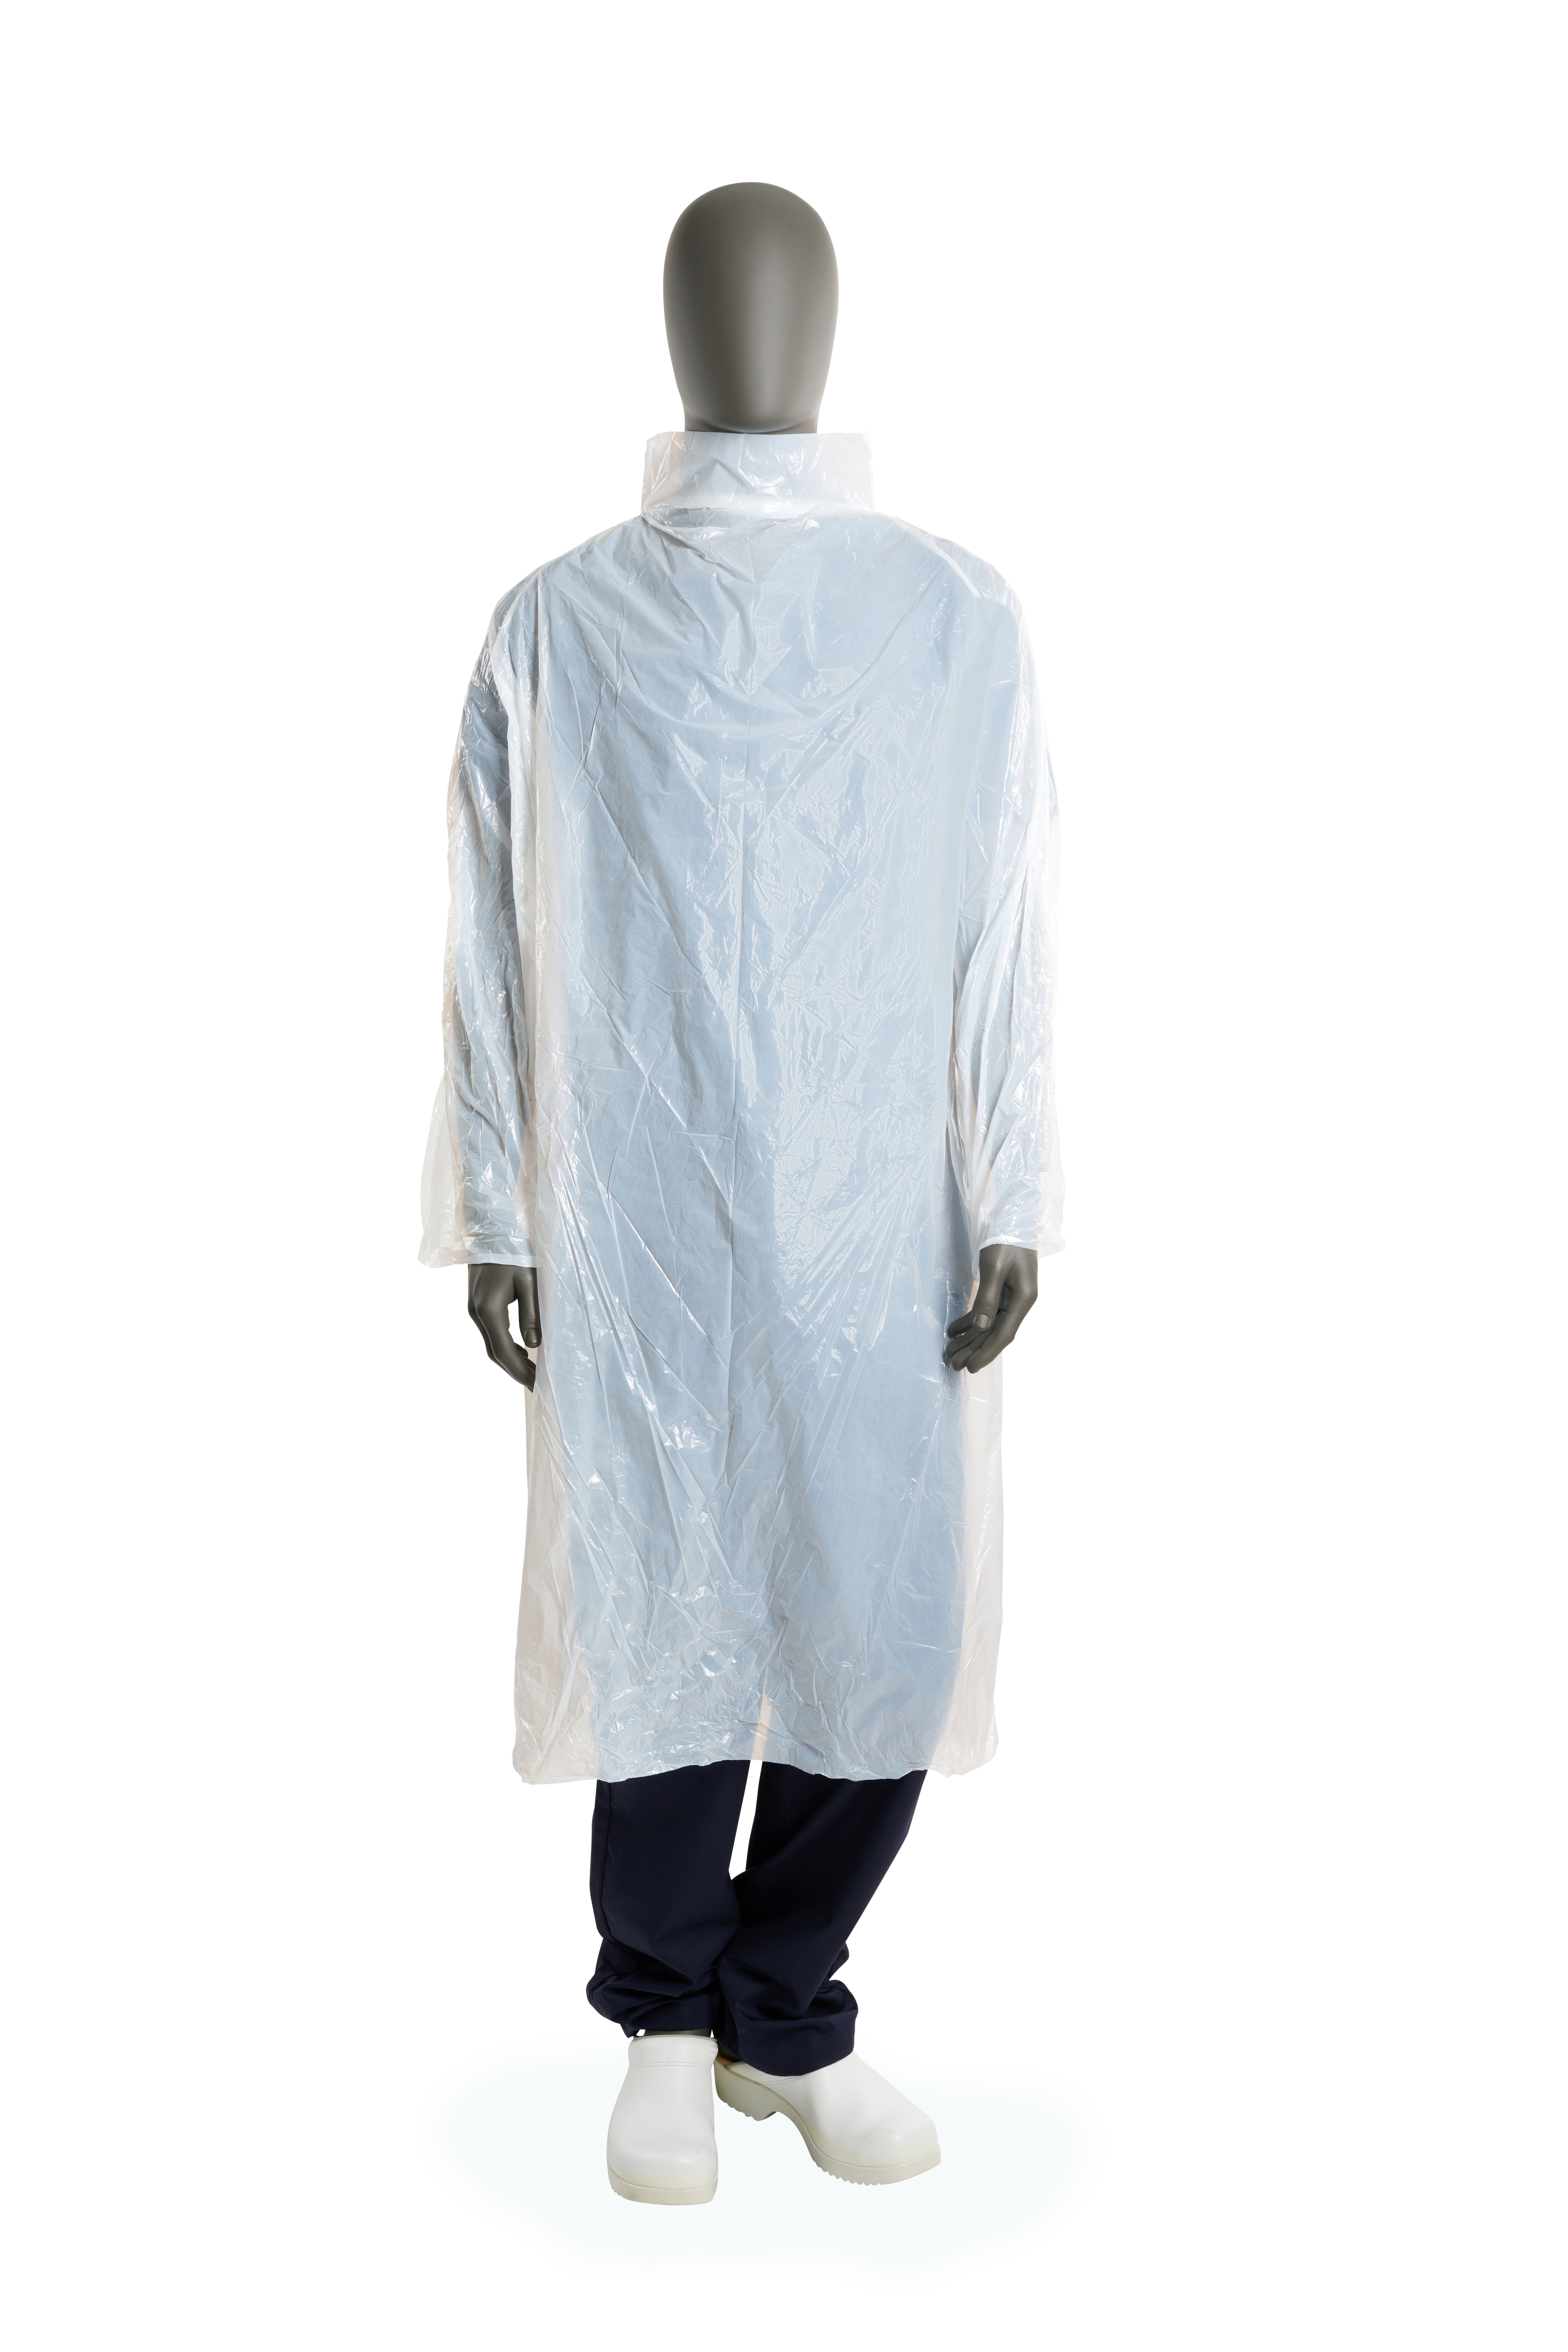 KRUTEX Disposable Gown, white, 120 cm